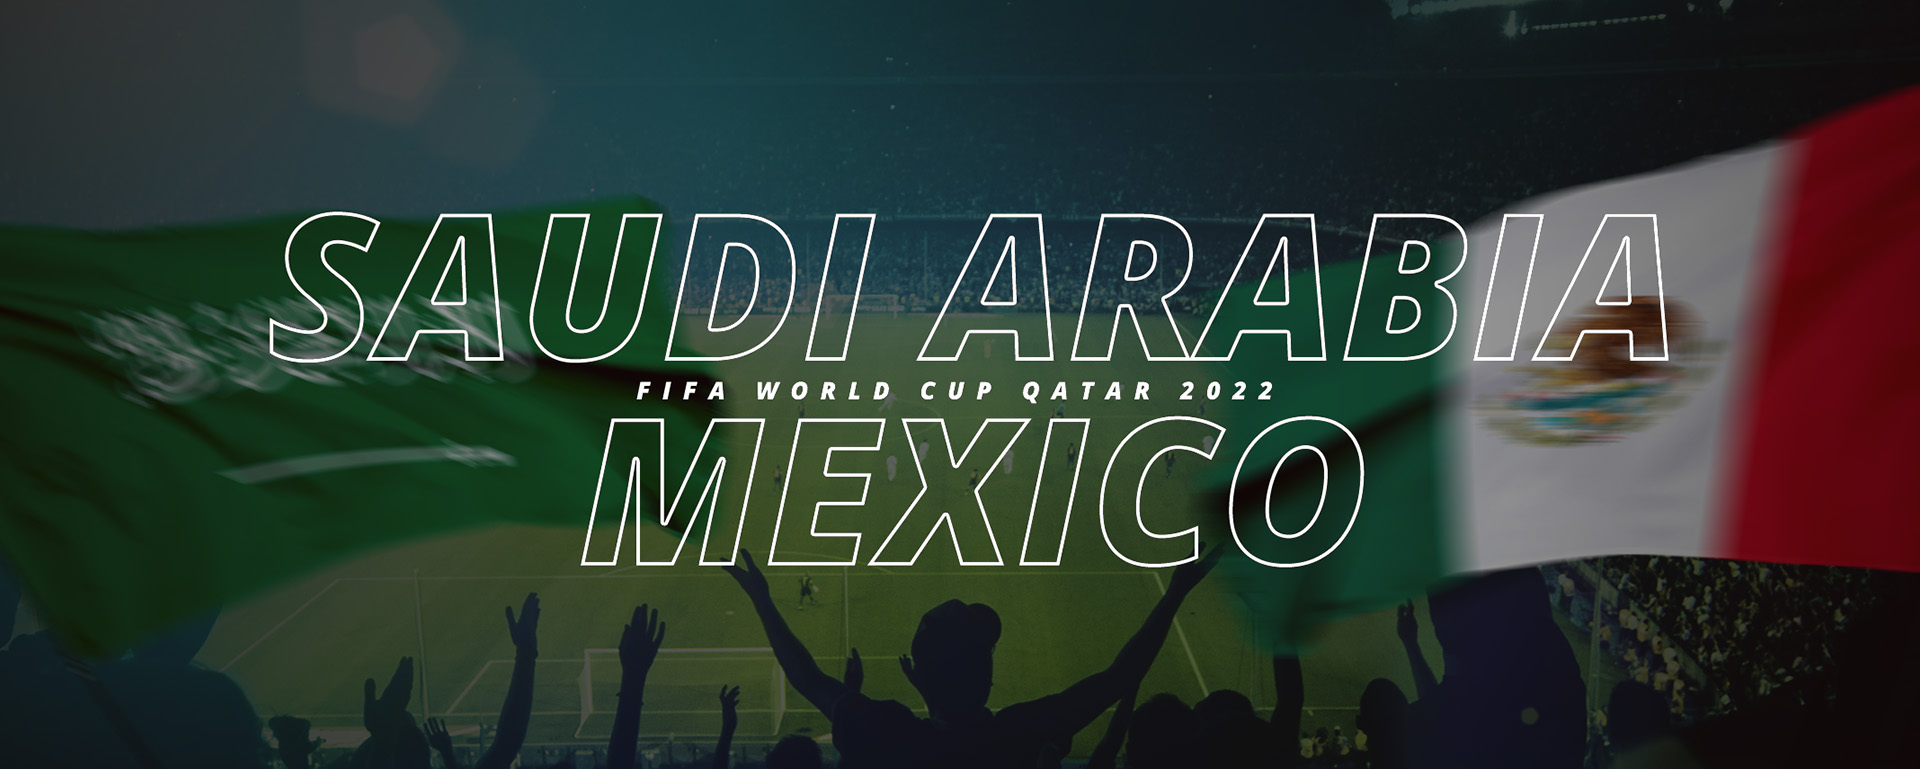 SAUDI ARABIA VS MEXICO | FIFA WORLD CUP QATAR 2022